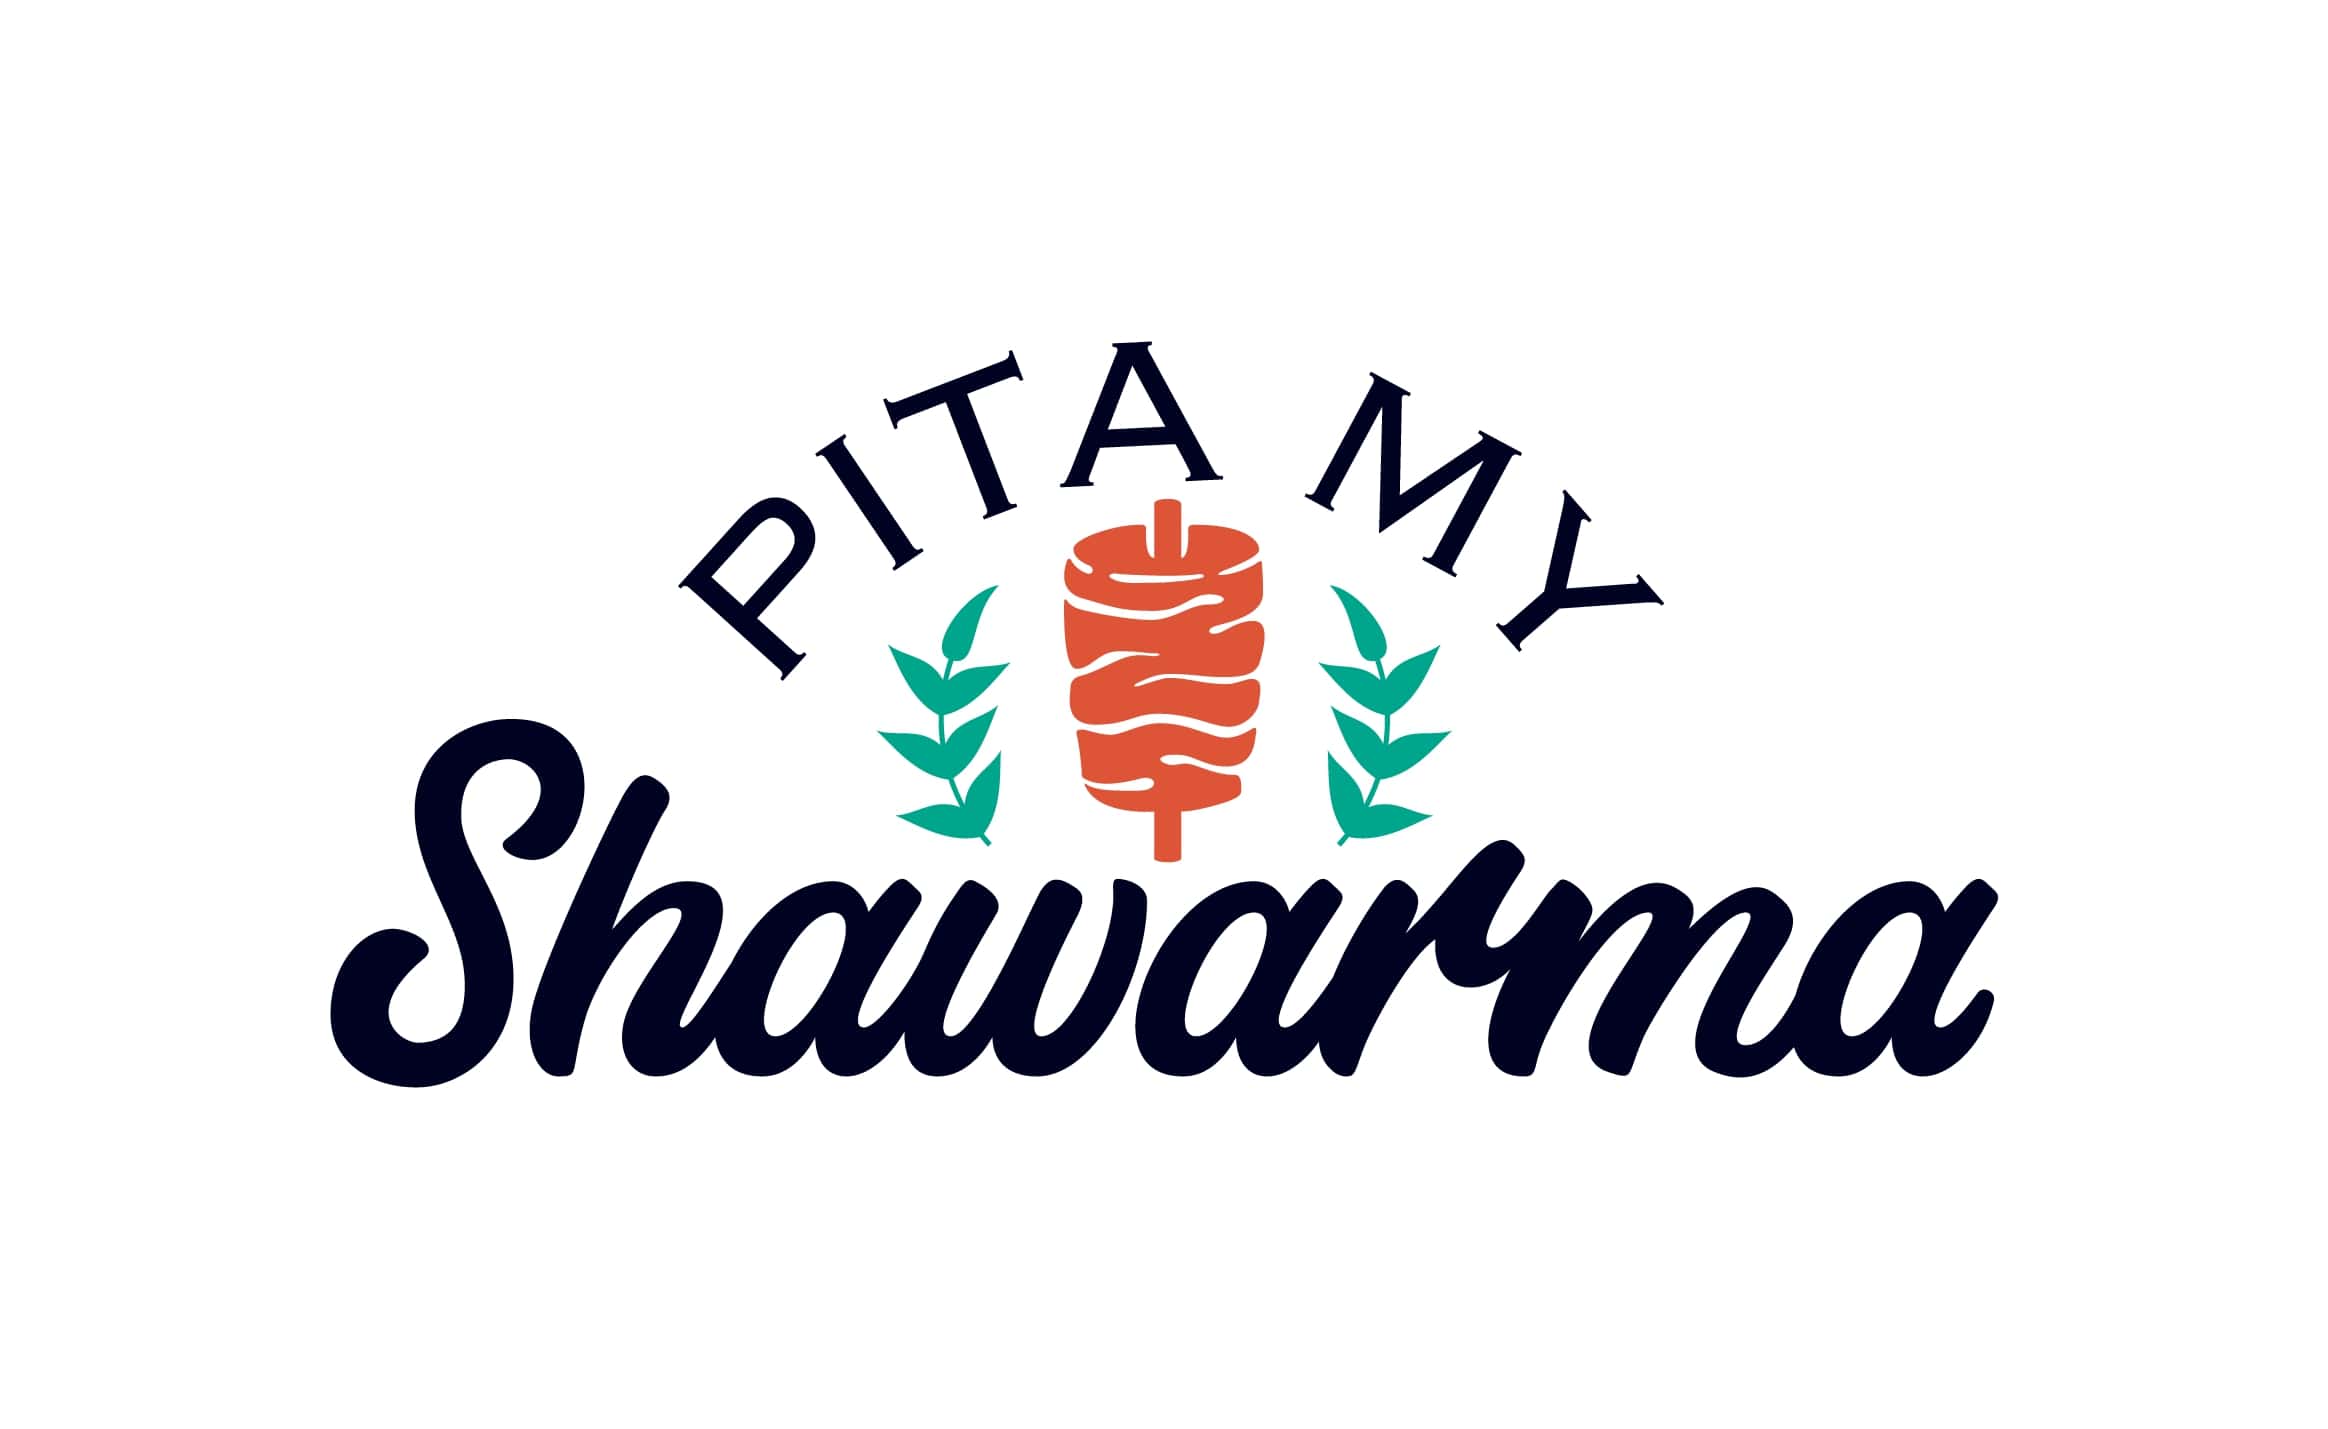 100,000 Shawarma logo Vector Images | Depositphotos